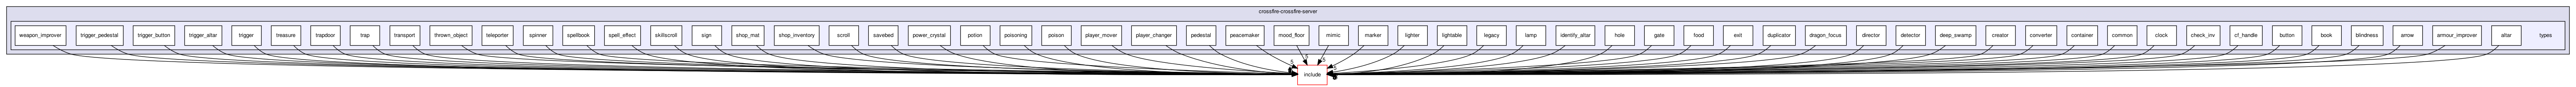 crossfire-crossfire-server/types